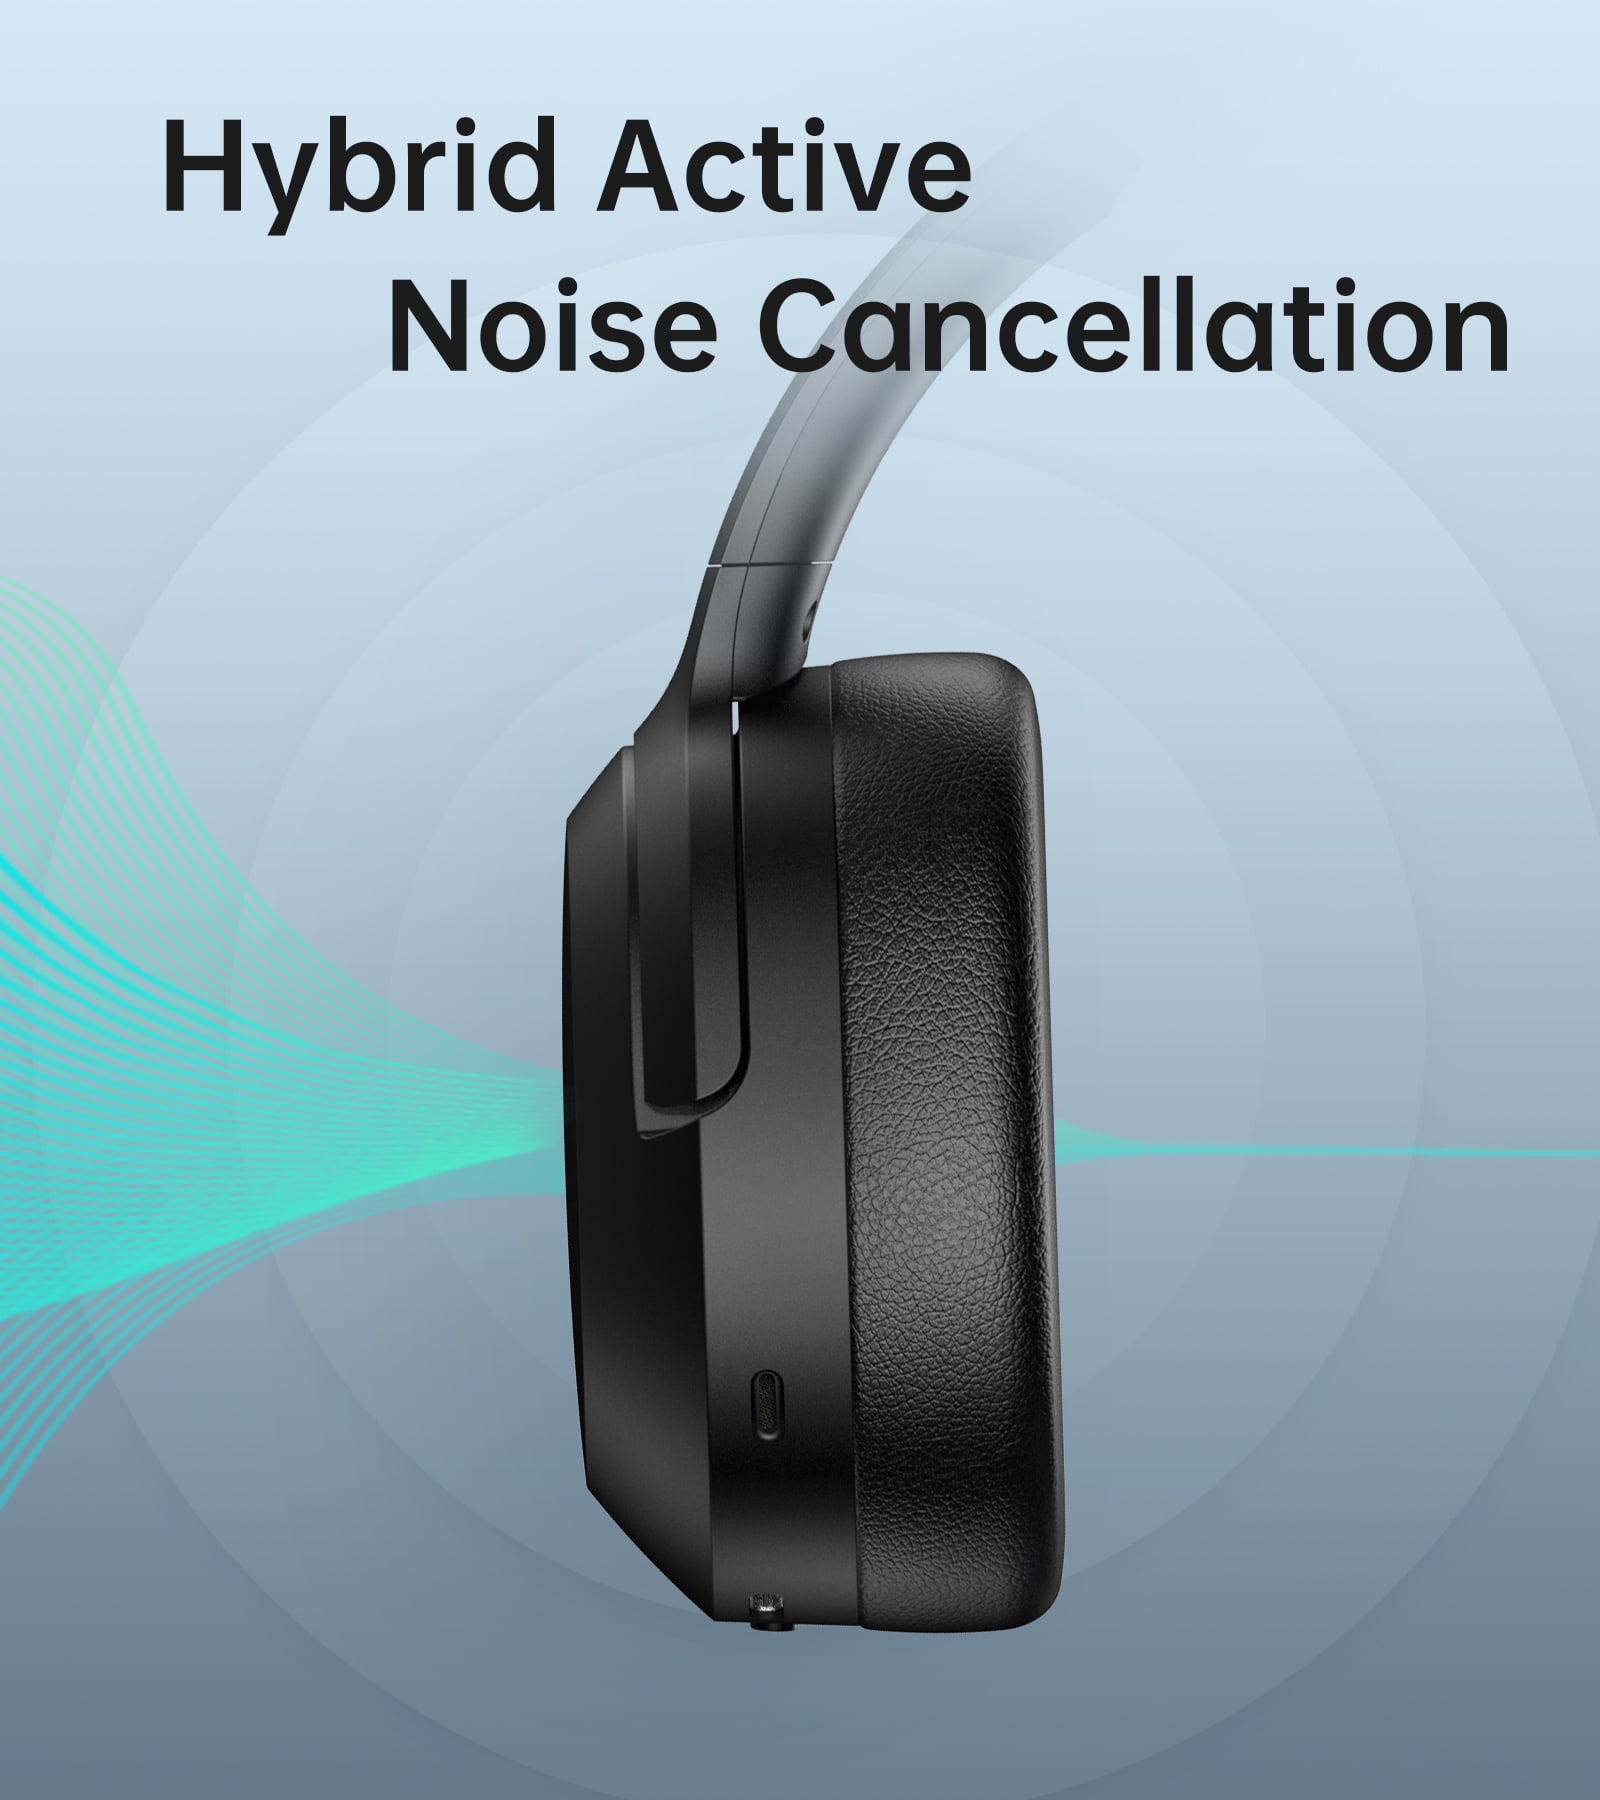 EDIFIER W820NB Headphones, Wireless Bluetooth Headphones, Active Noise  Reduction, Sports Games, Esports Music 